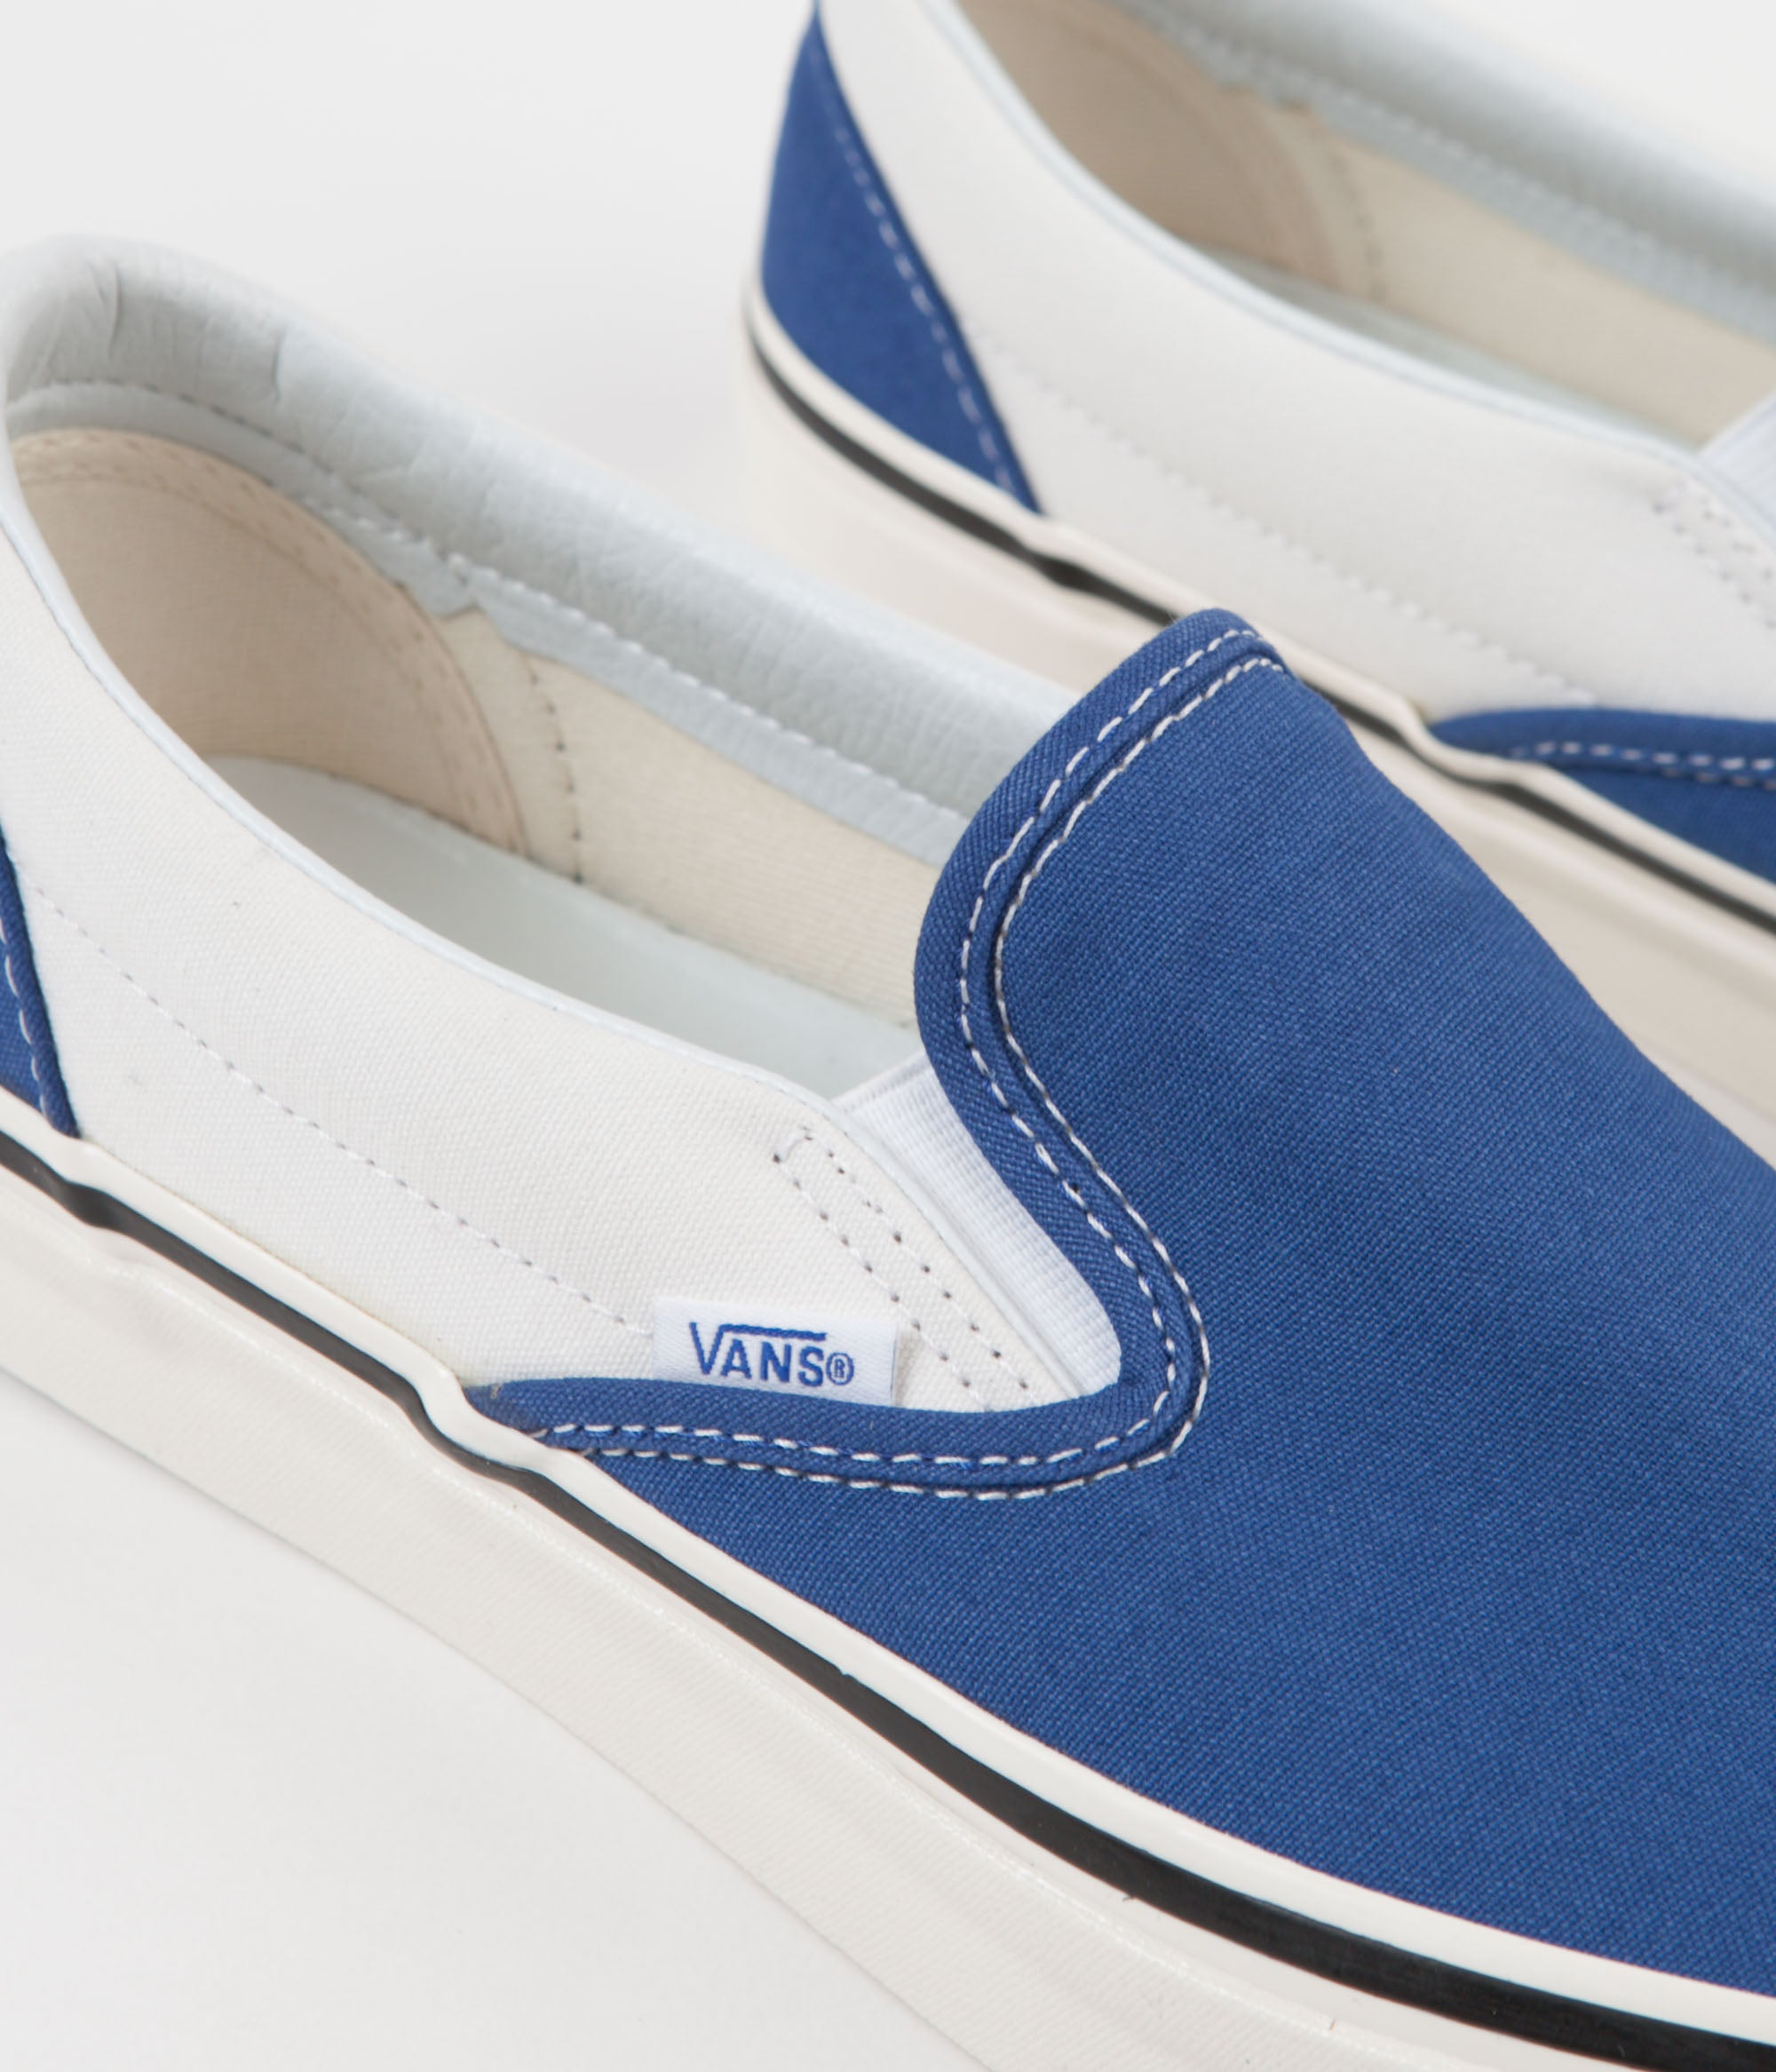 Vans Classic Slip-On 98 DX Anaheim Factory Shoes - OG Blue / White ...